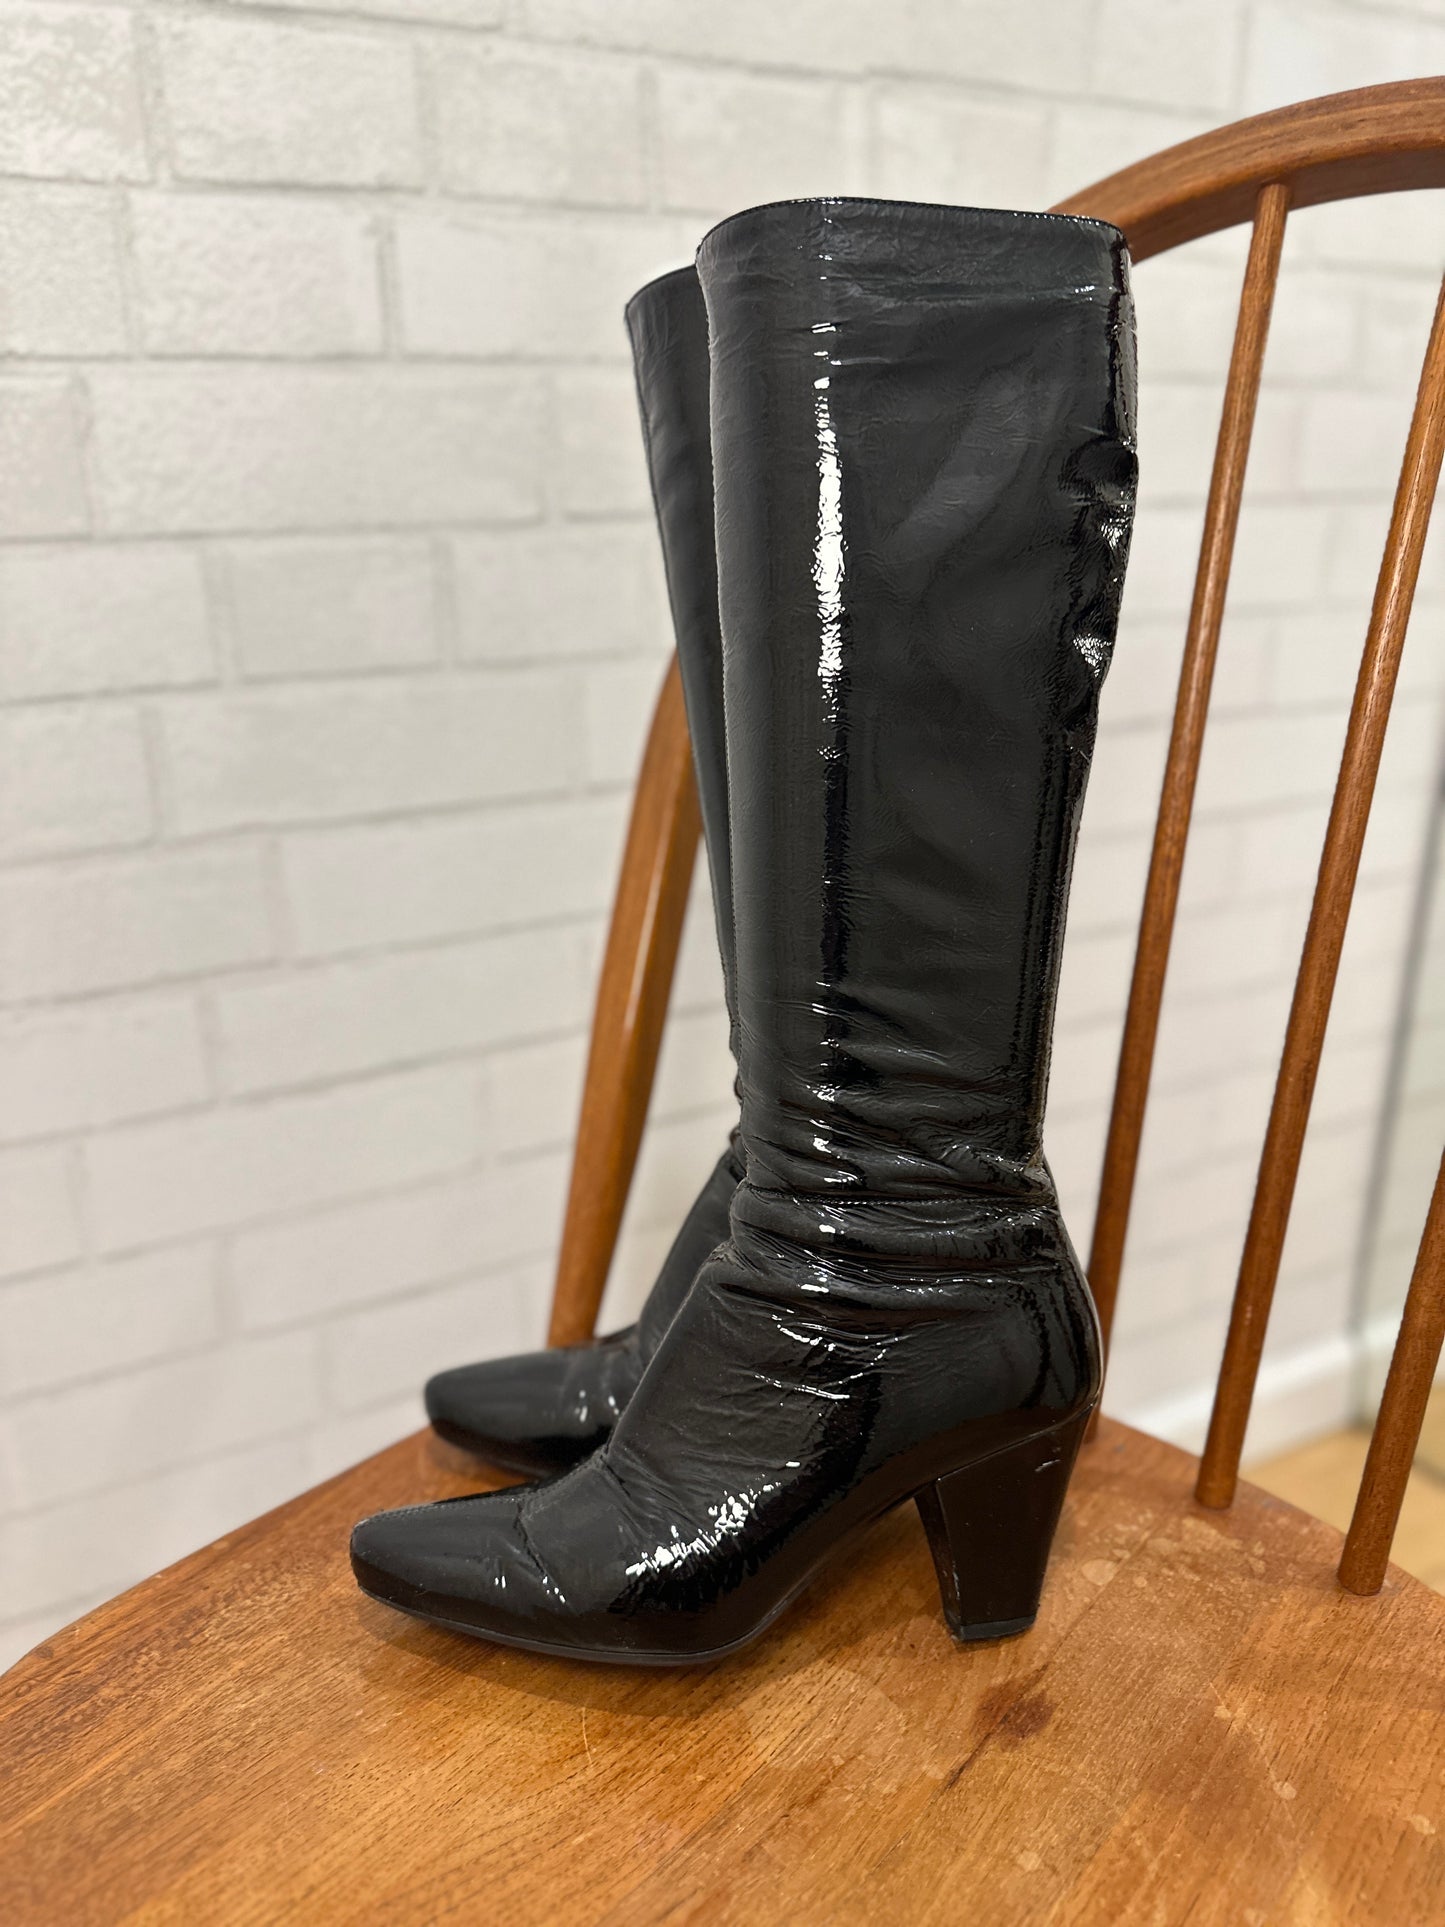 PRADA High heels Tall Boots Size 37.5-US8